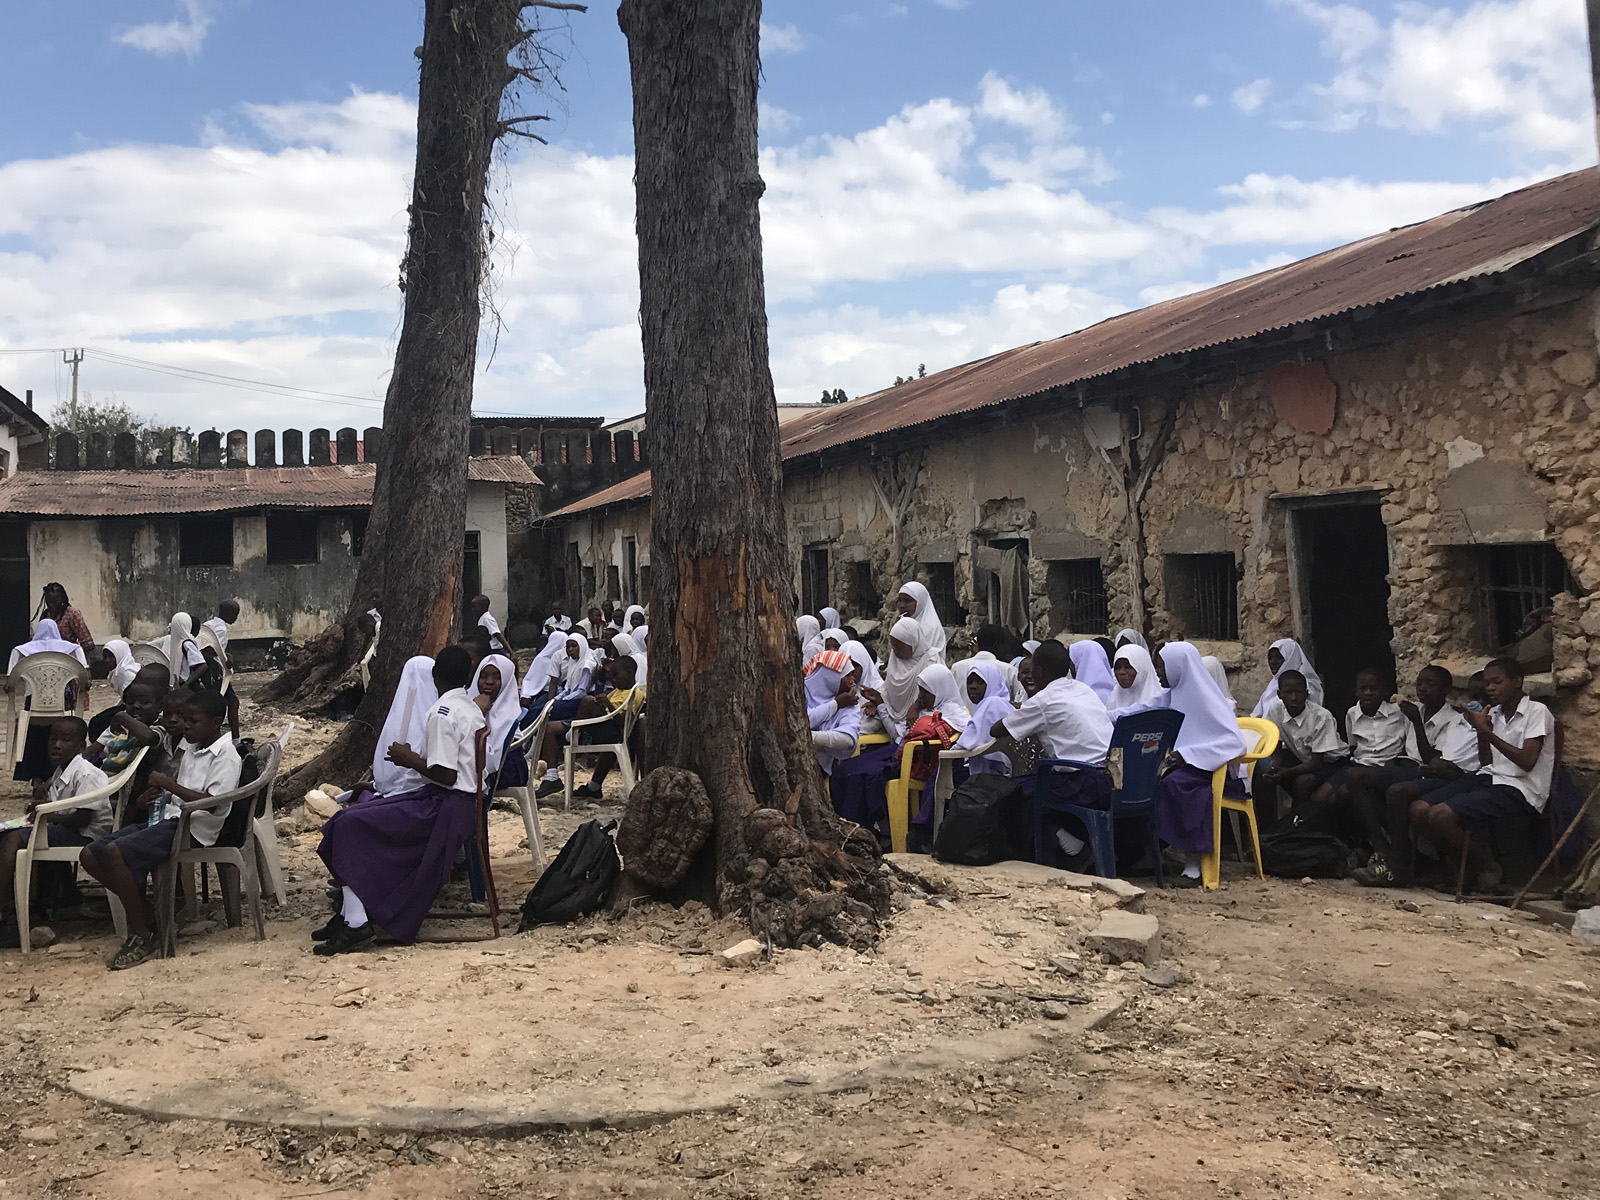 School children in Lindi, Tanzania